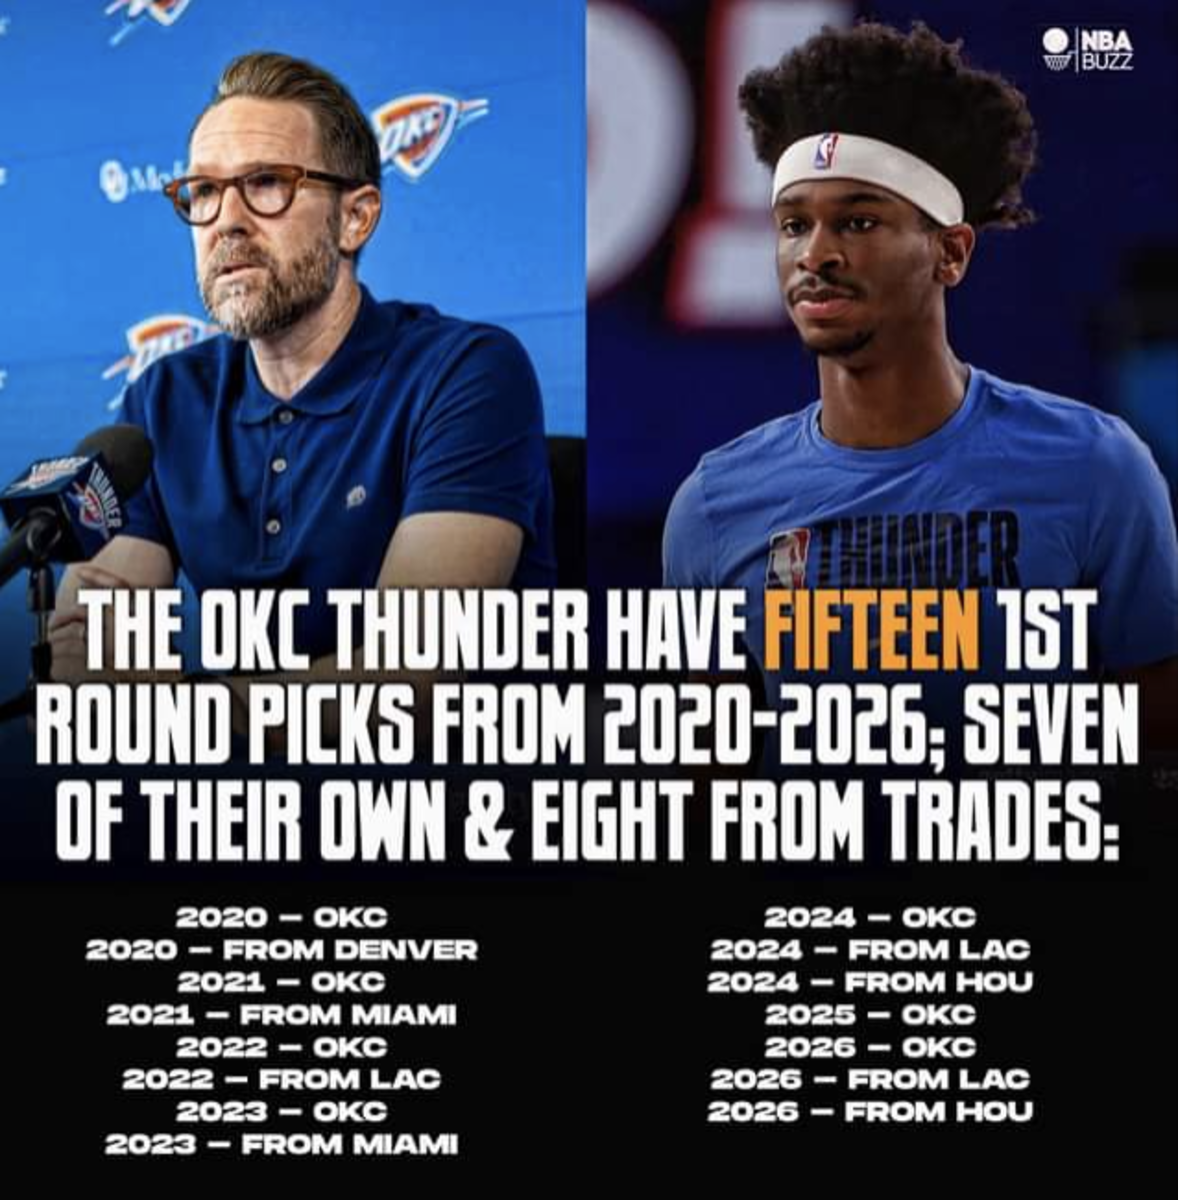 The Oklahoma City Thunder Have 15 1st Round Picks From 2020-2026